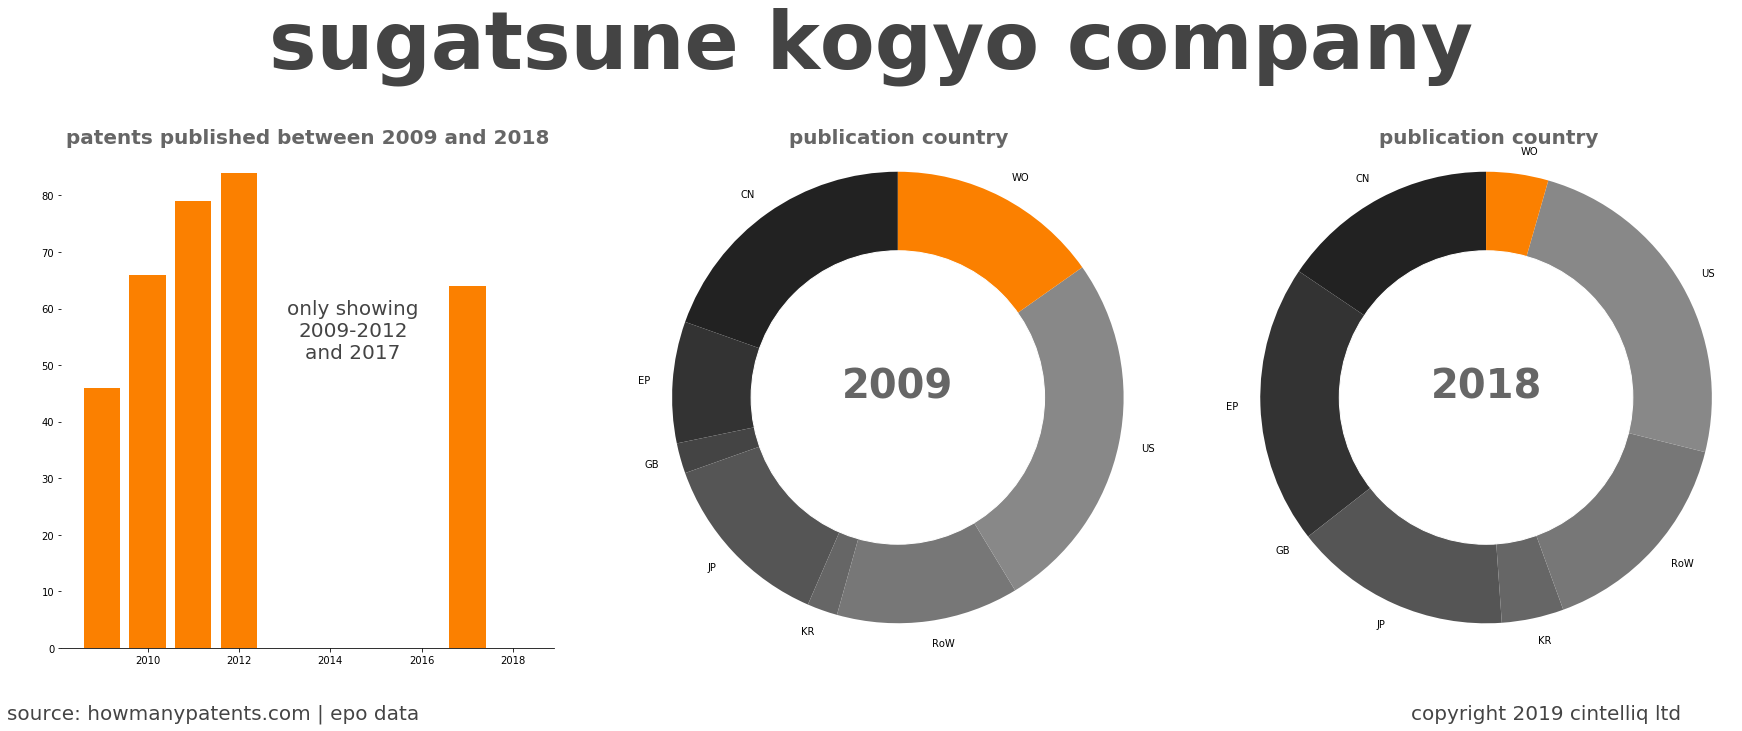 summary of patents for Sugatsune Kogyo Company